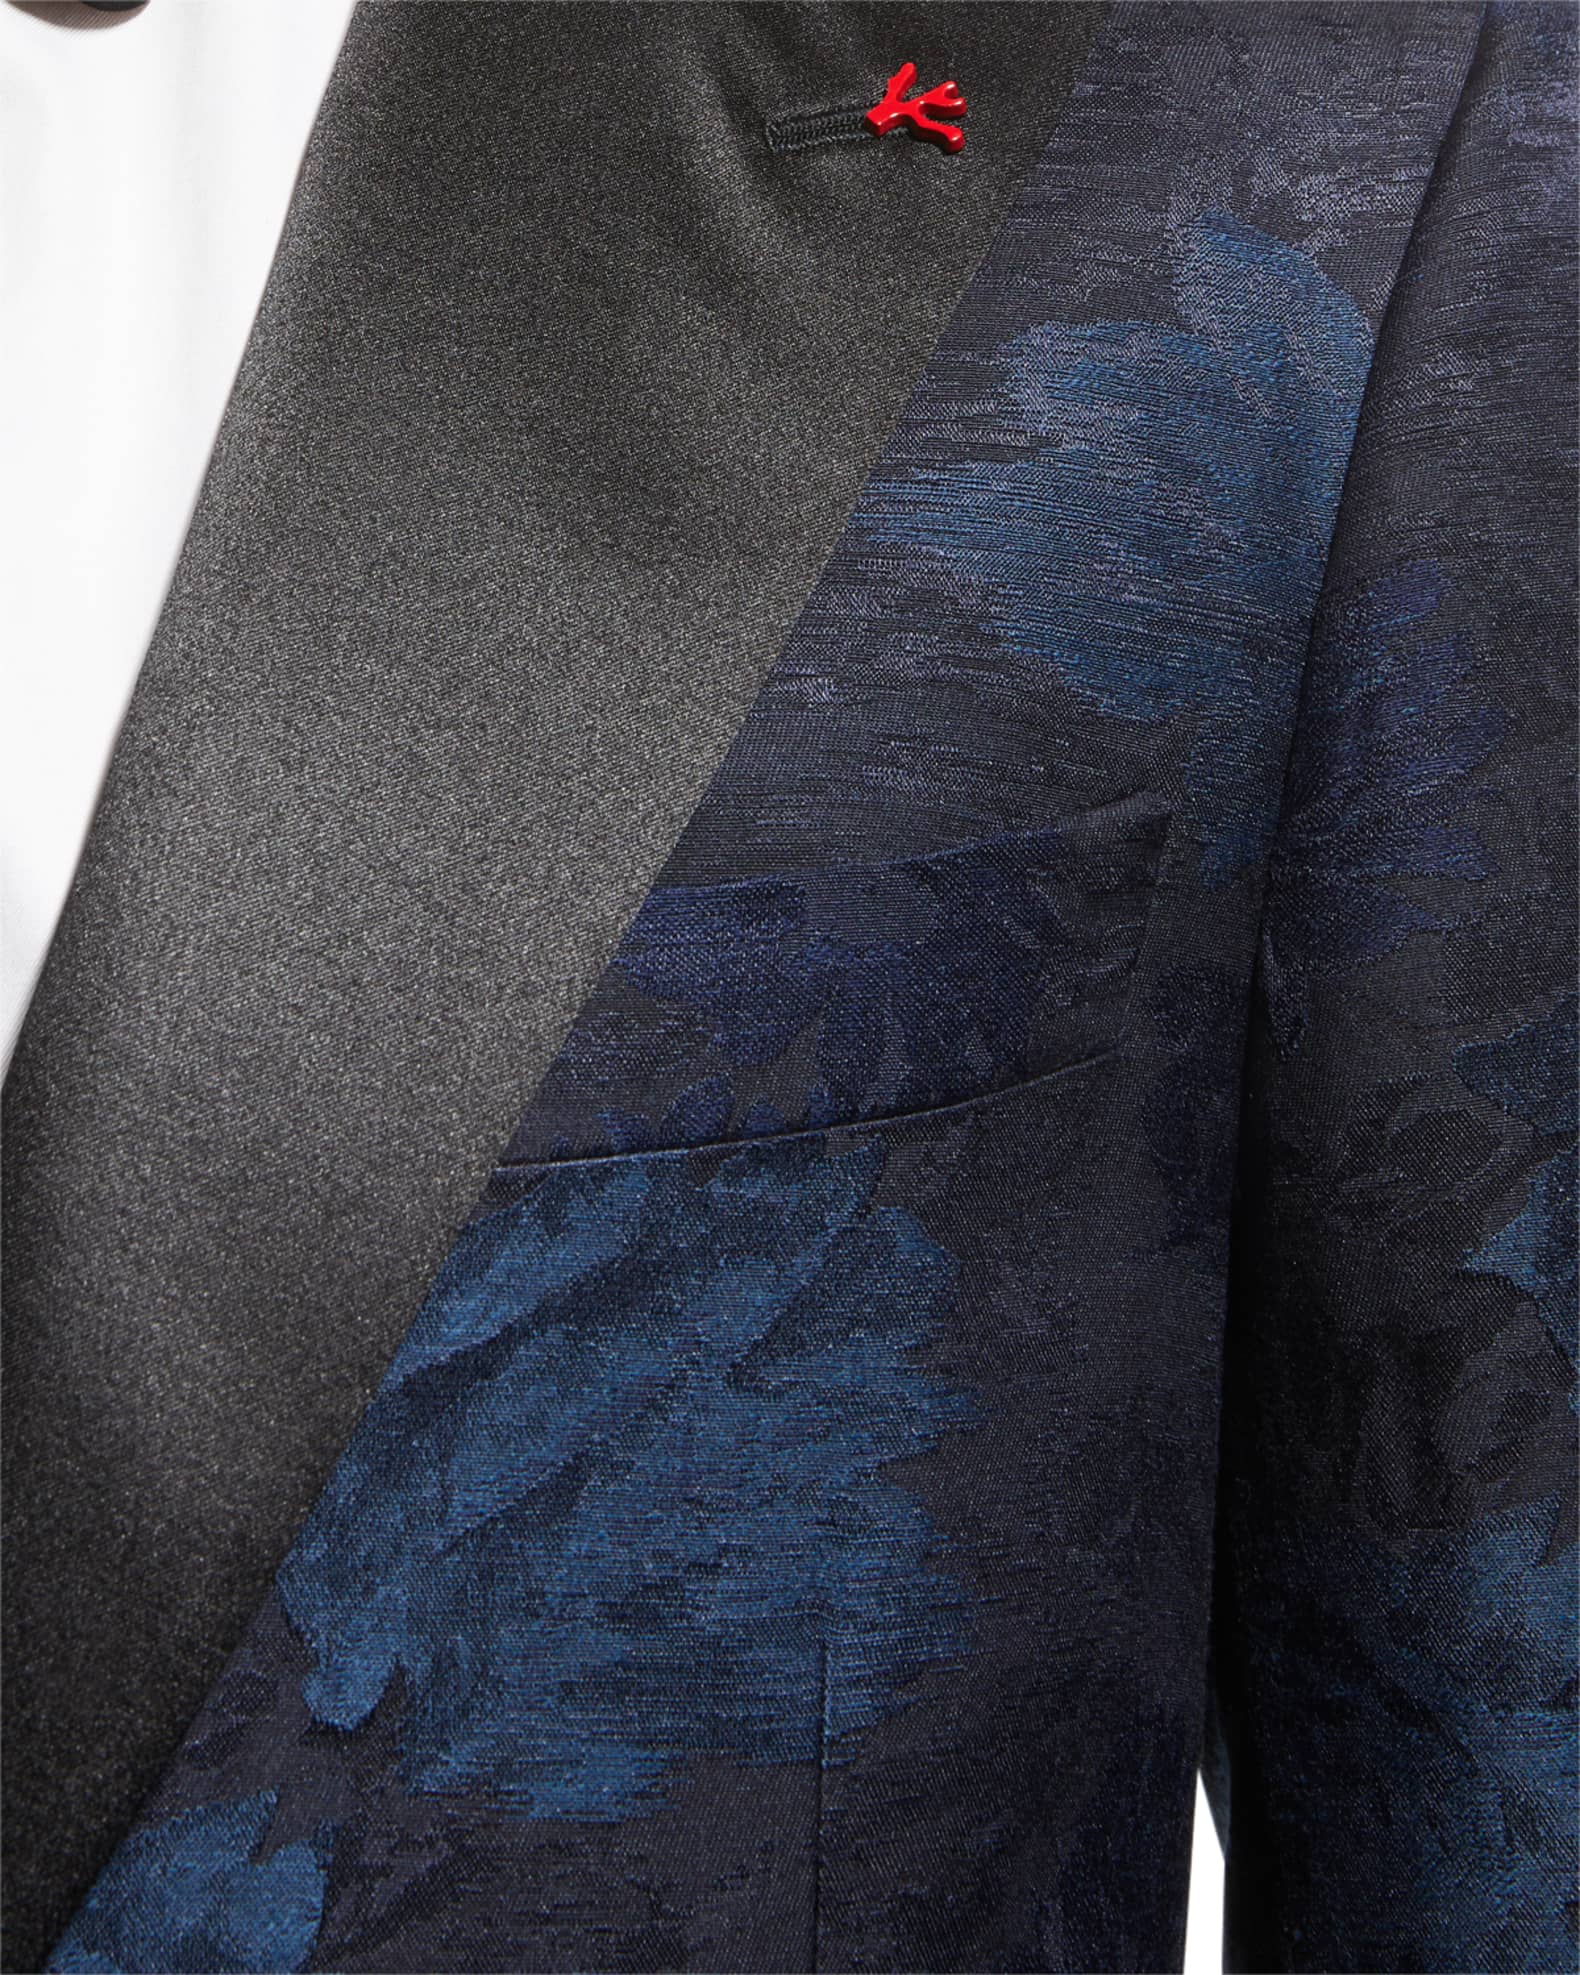 Isaia Men's Floral Silk-Cashmere Dinner Jacket | Neiman Marcus